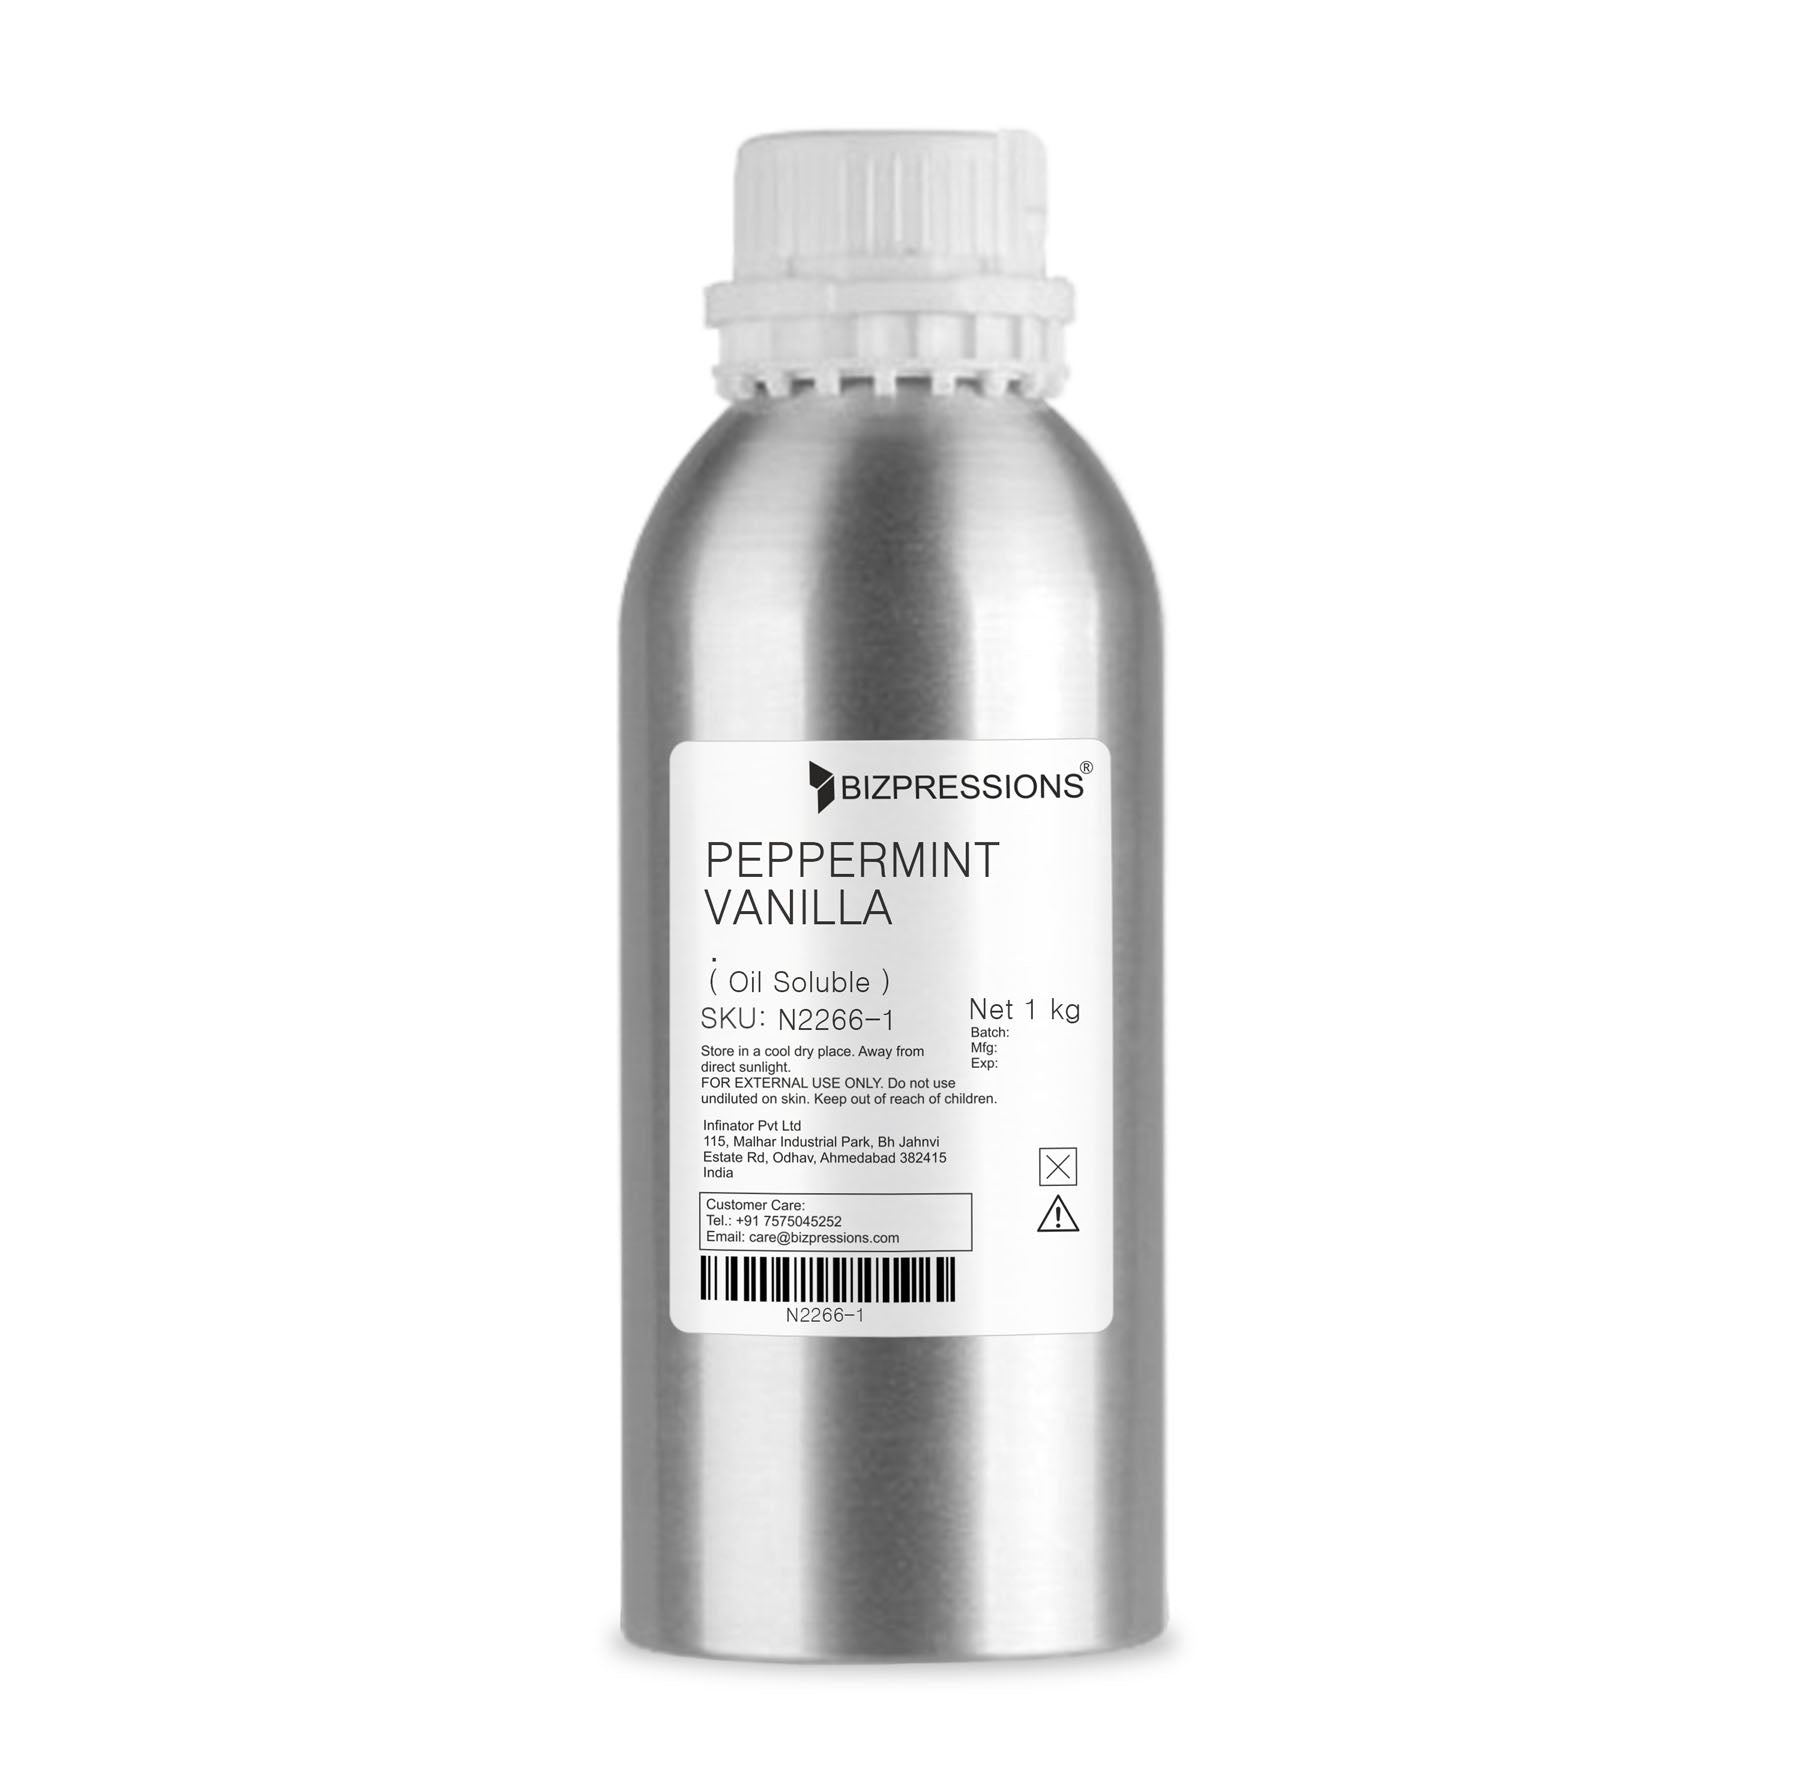 PEPPERMINT VANILLA - Fragrance ( Oil Soluble ) - 1 kg